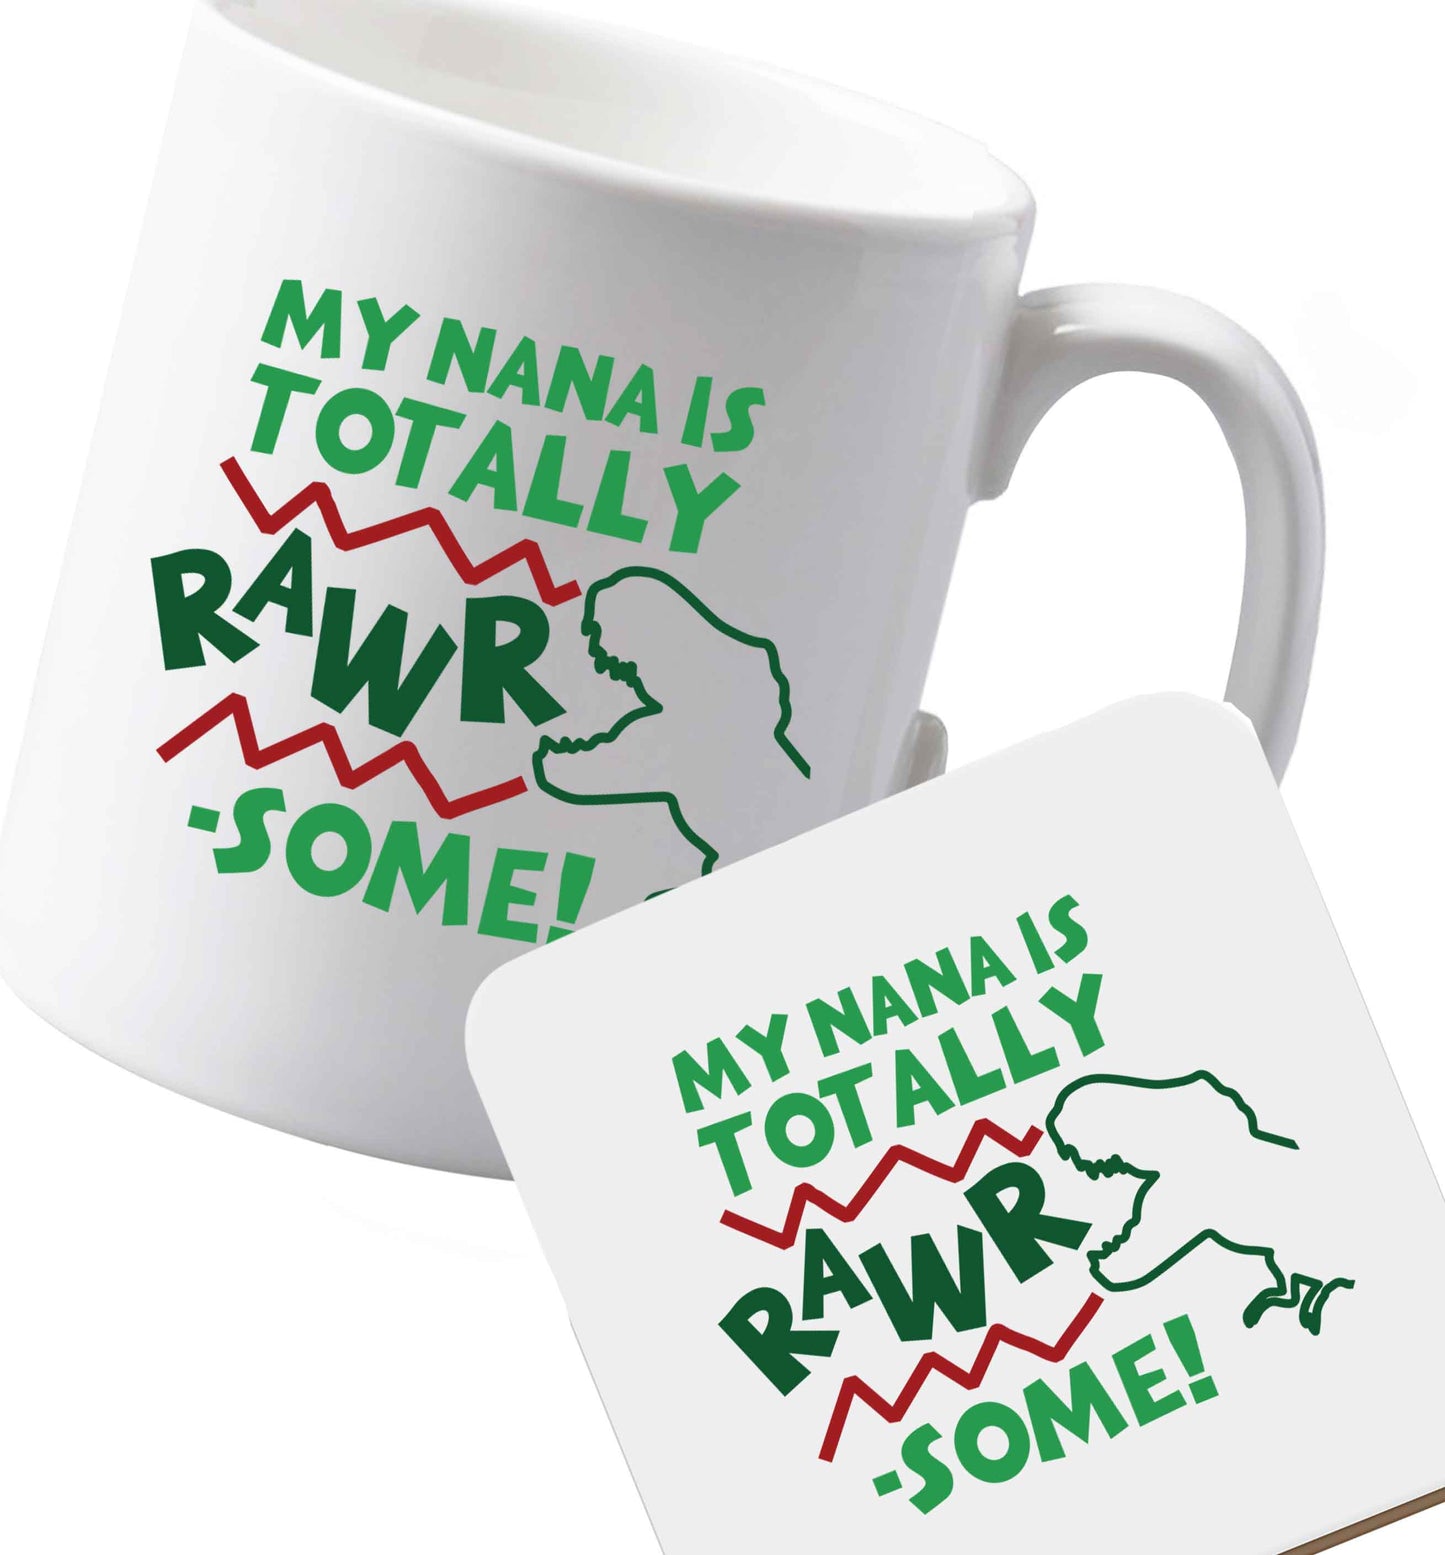 10 oz Ceramic mug and coaster My nana is totally rawrsome both sides